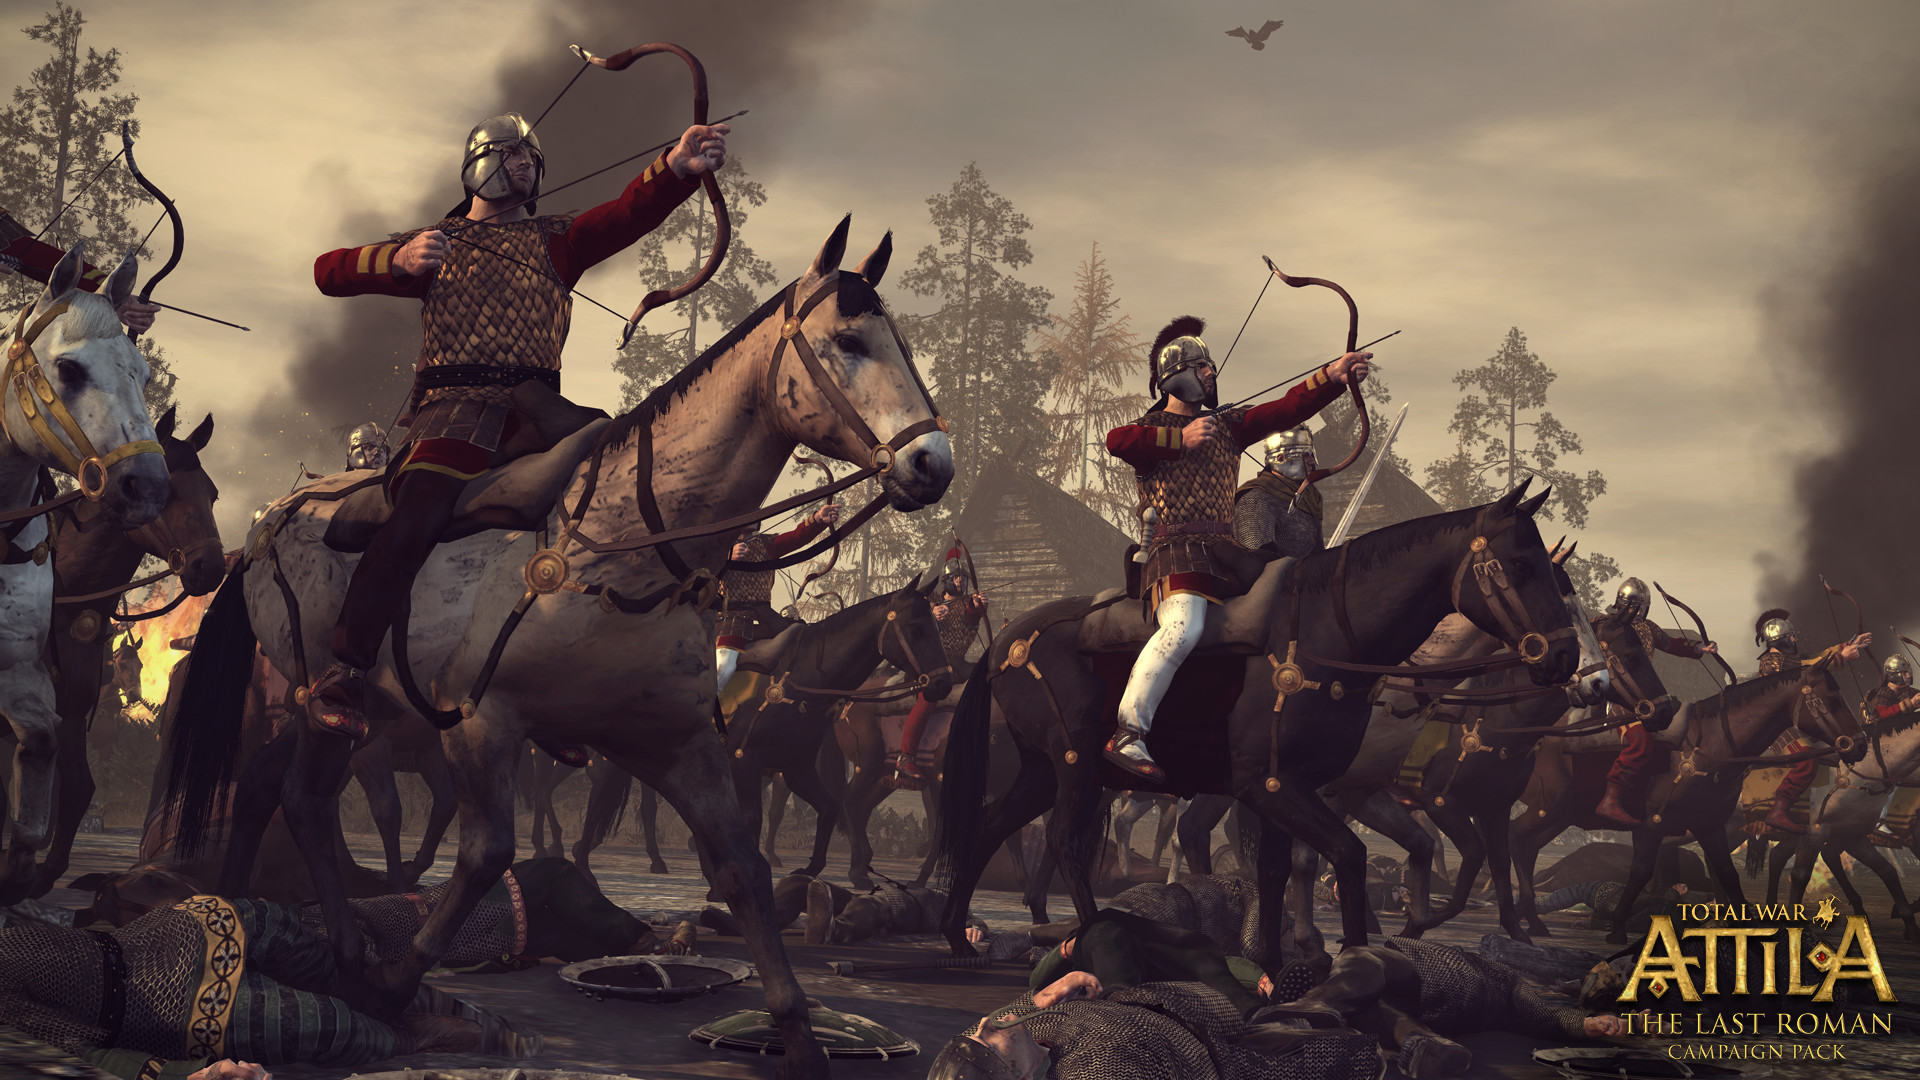 Total War: ATTILA - The Last Roman Campaign Pack Featured Screenshot #1